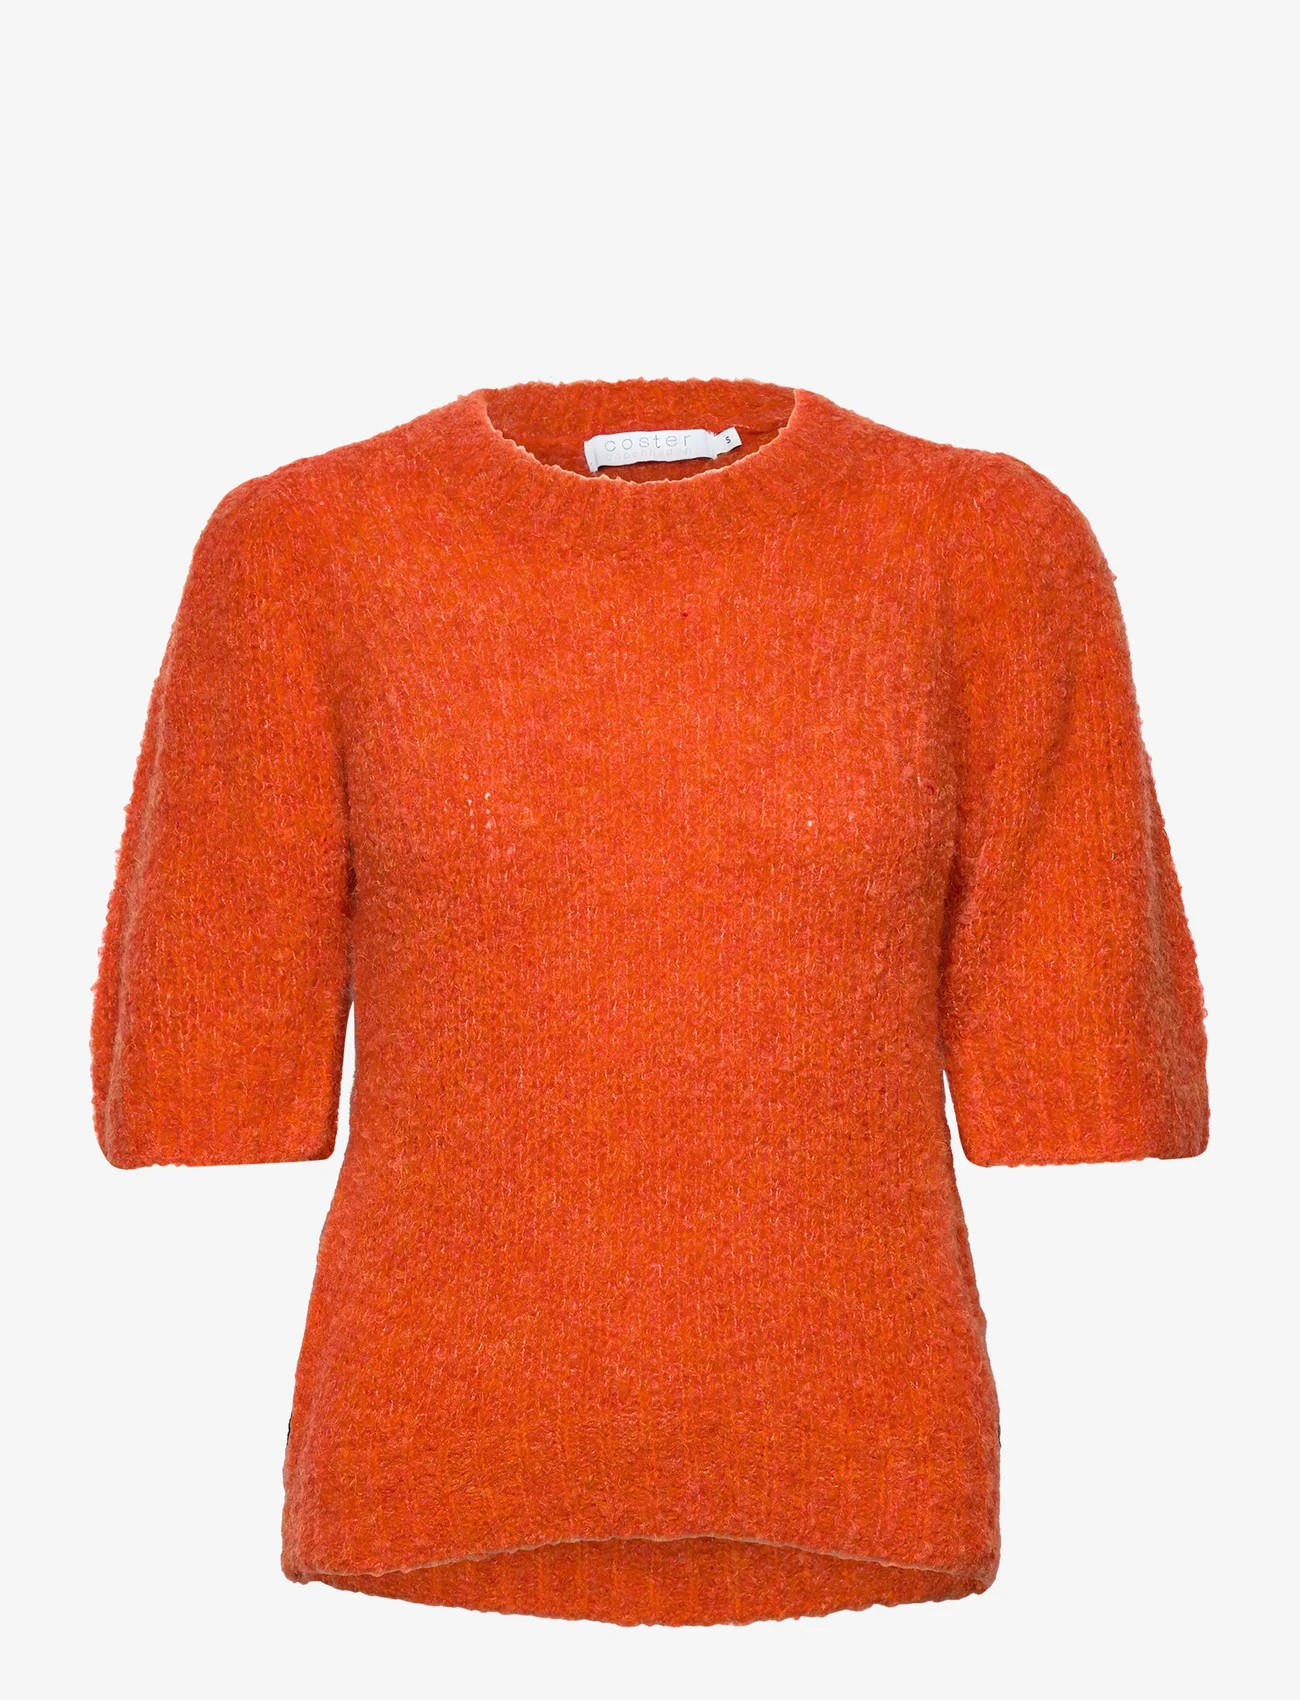 Coster Copenhagen - Knit with puff sleeves - jumpers - orange melange - 0